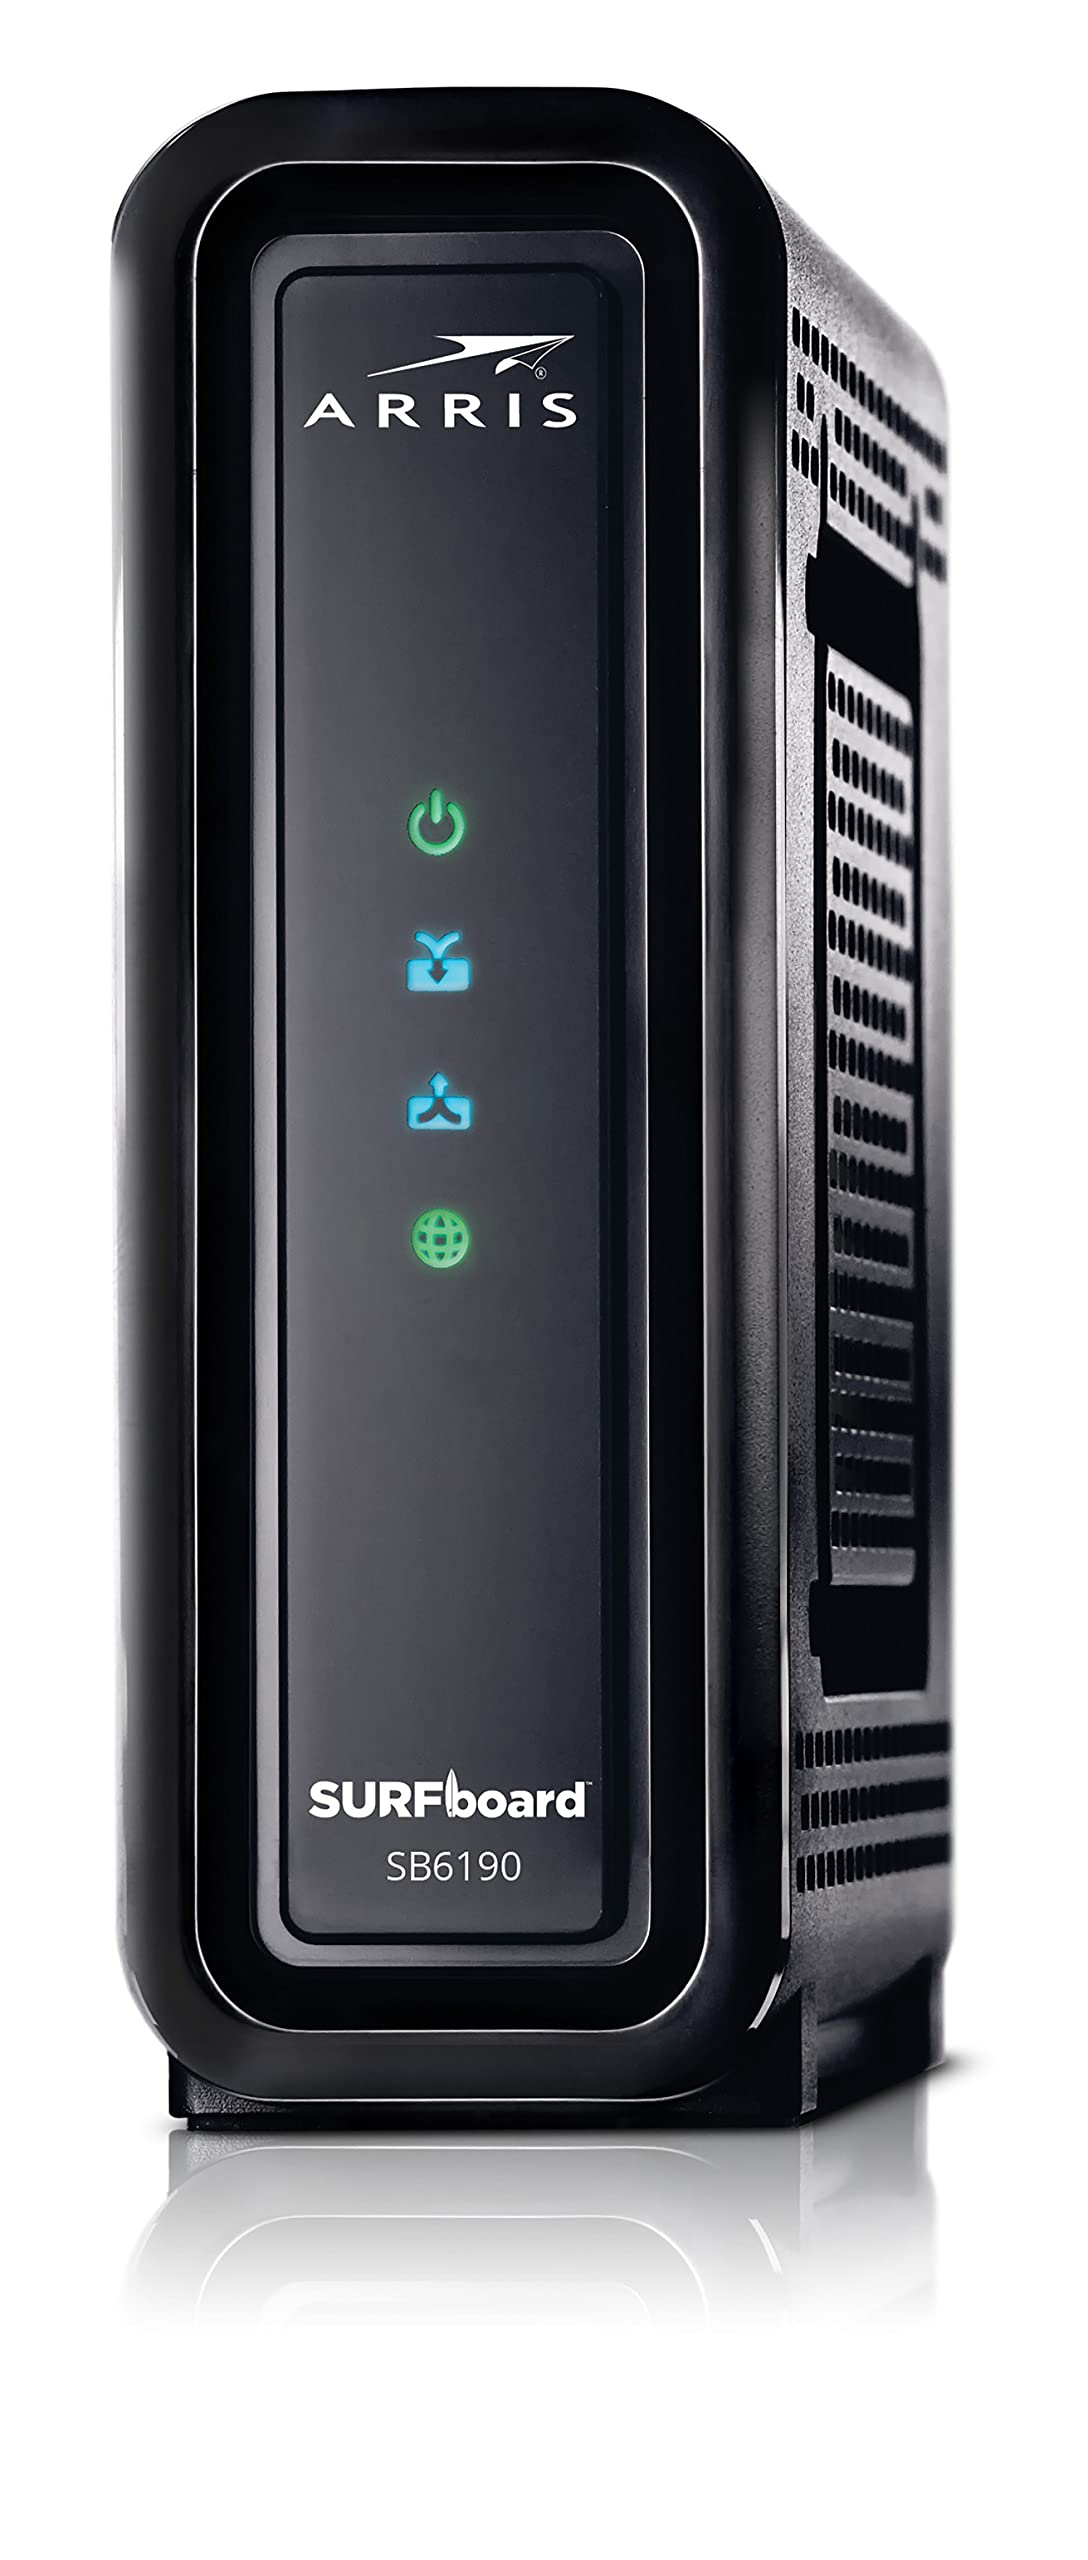 Arris Surfboard SB6190 32x8 DOCSIS 3.0 Gigabit Modem $55.17 + Free Shipping